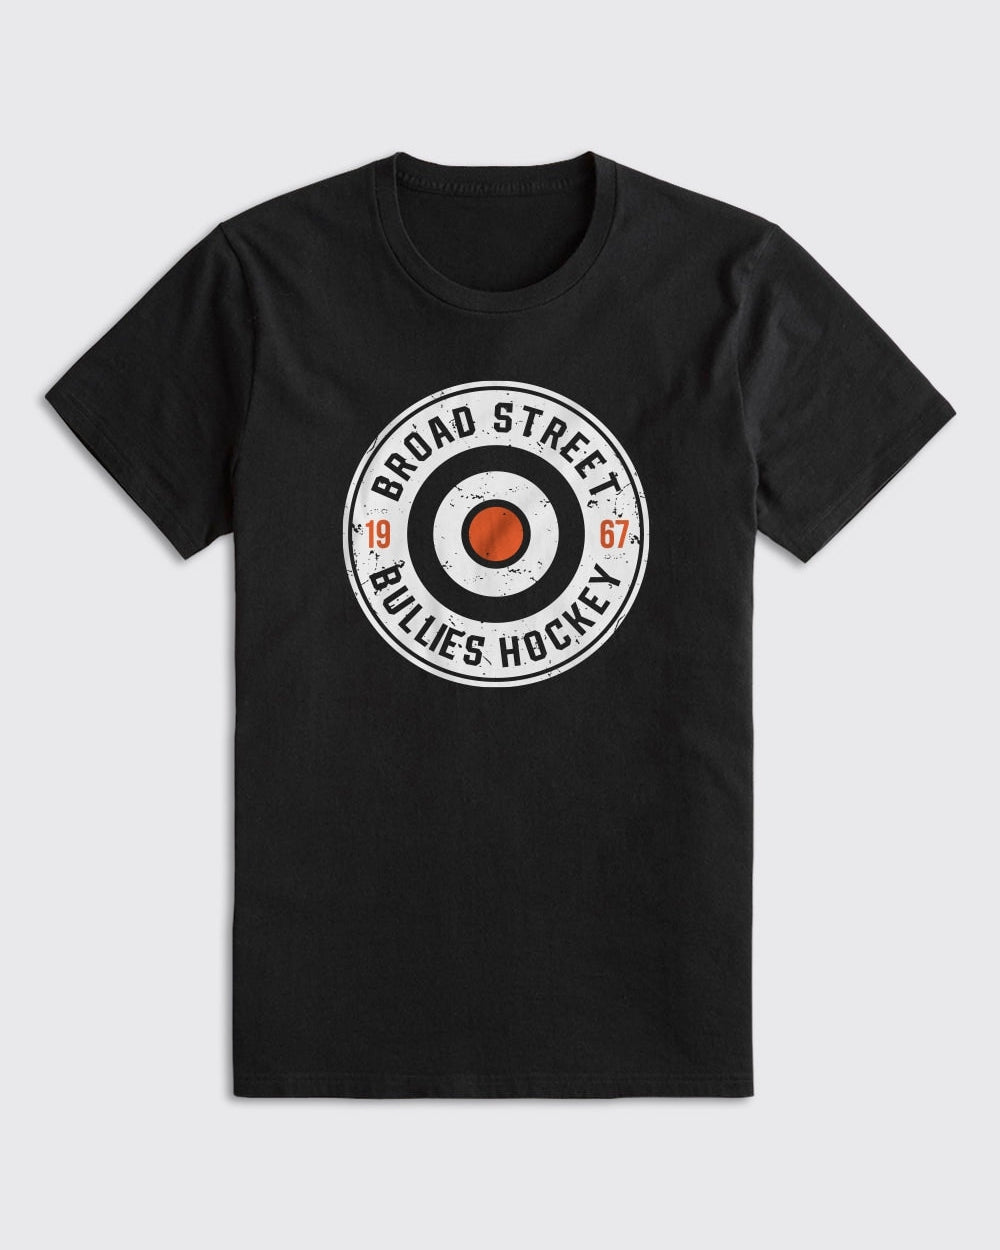 Philadelphia Flyers Broad Street Bullies Fist Distressed Men'S T Shirt –  BlacksWhite